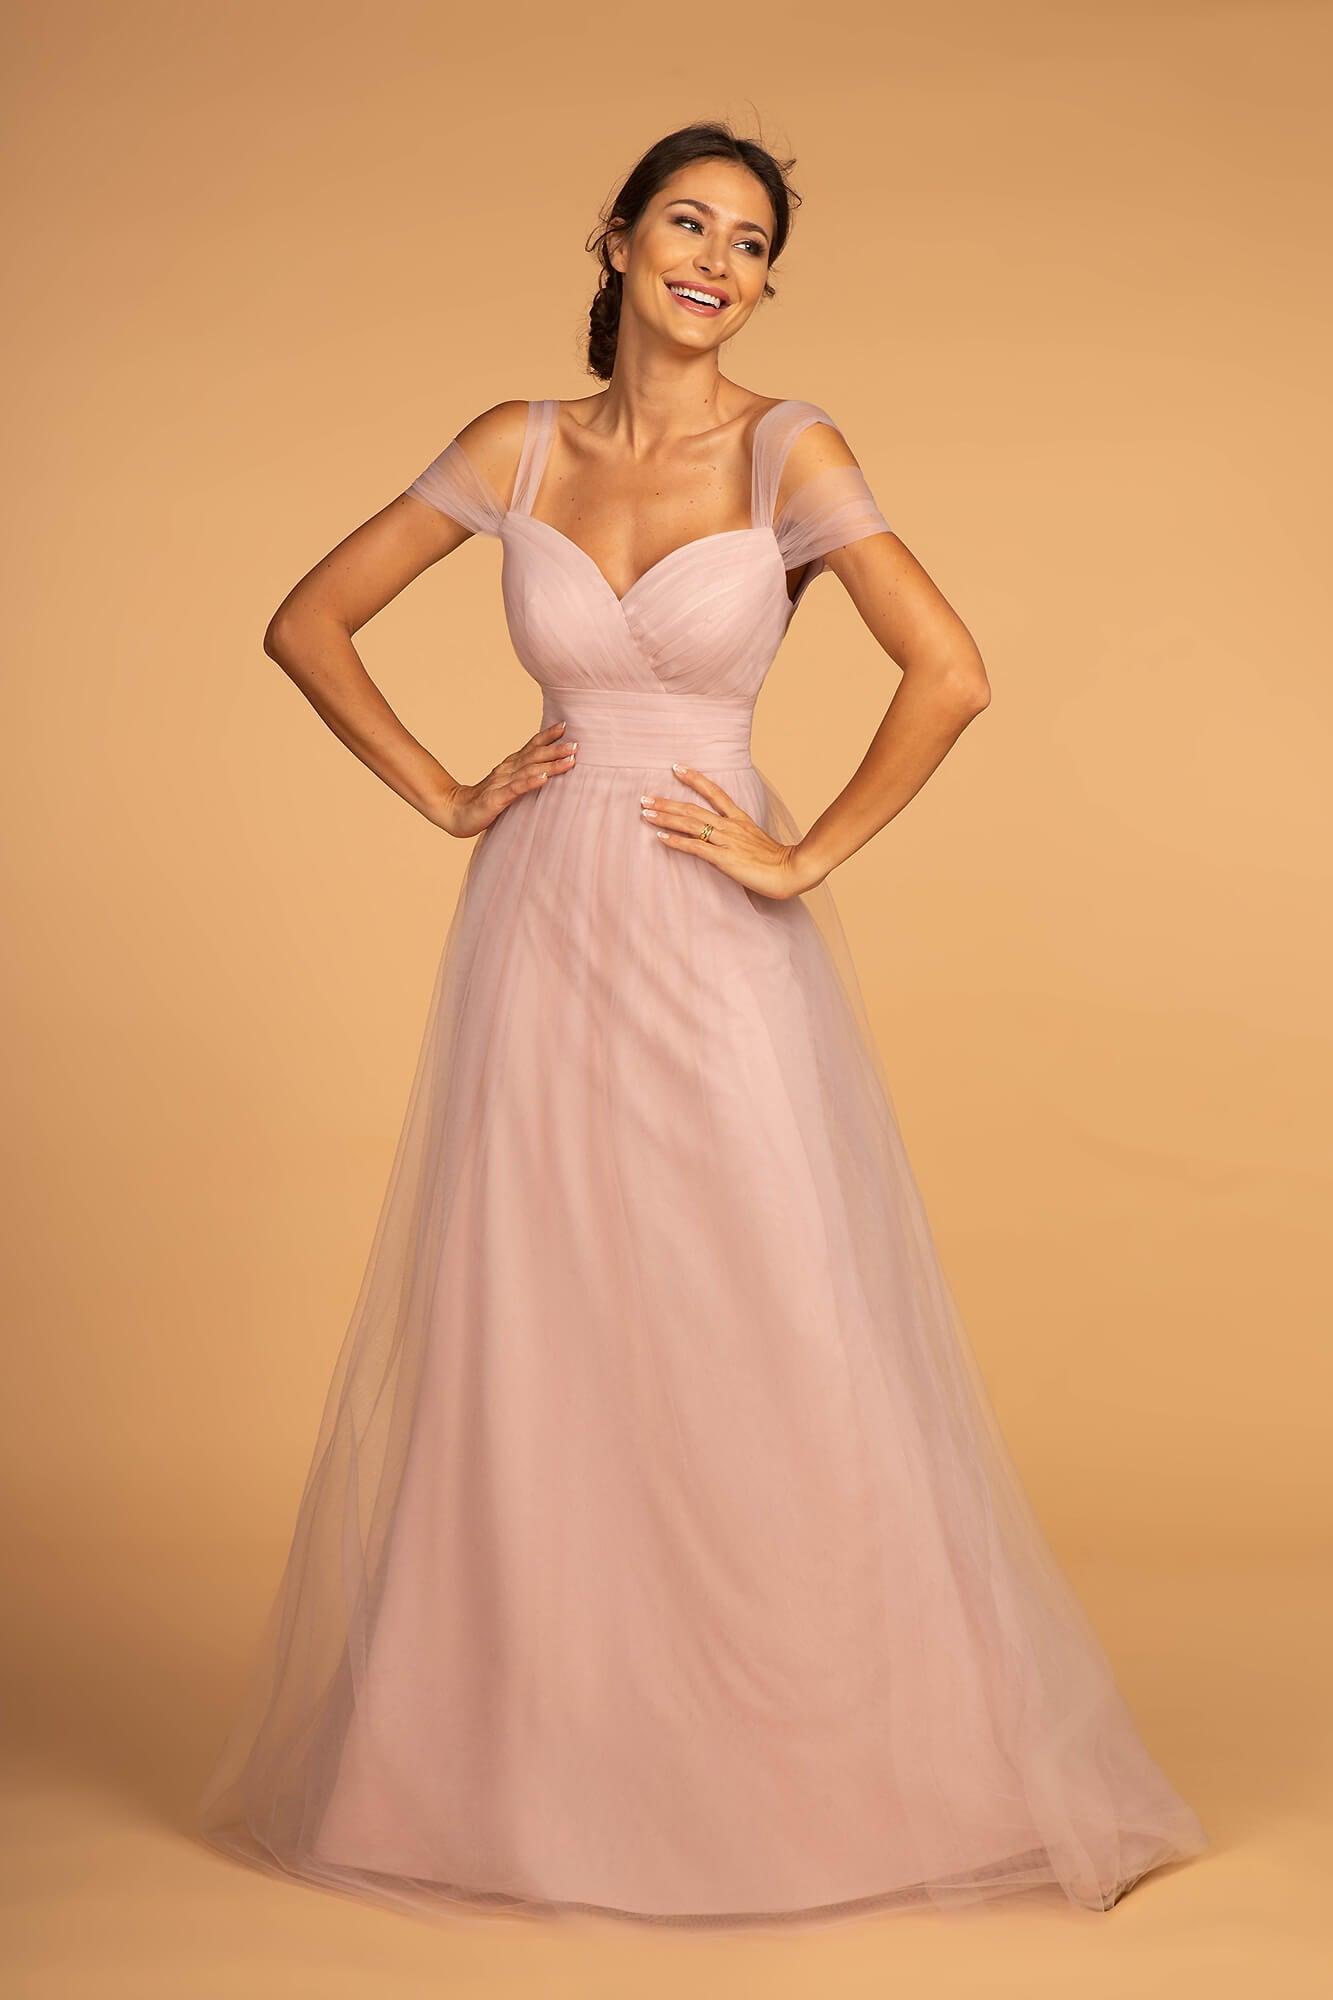 Sweethearted Formal Long Dress Bridesmaid - The Dress Outlet Elizabeth K